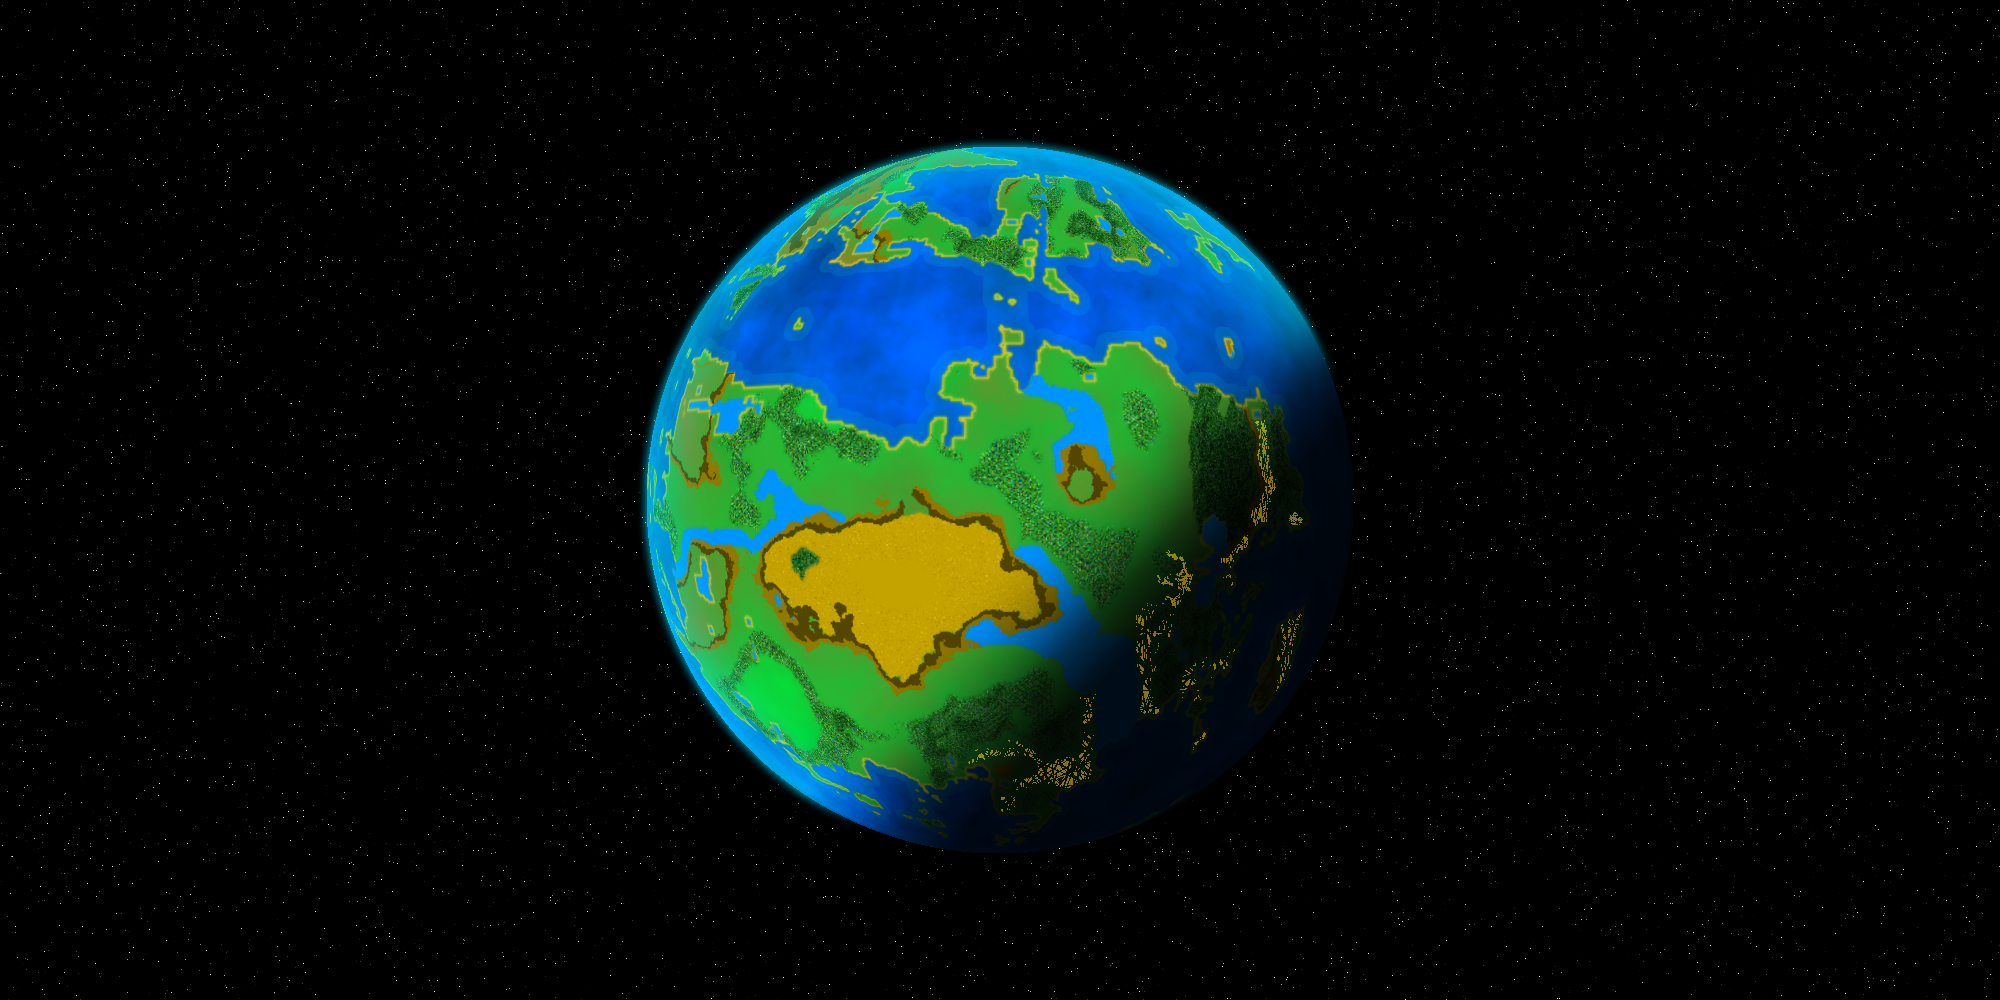 Worldbuilding Map 1 - Globe (no dark halo)